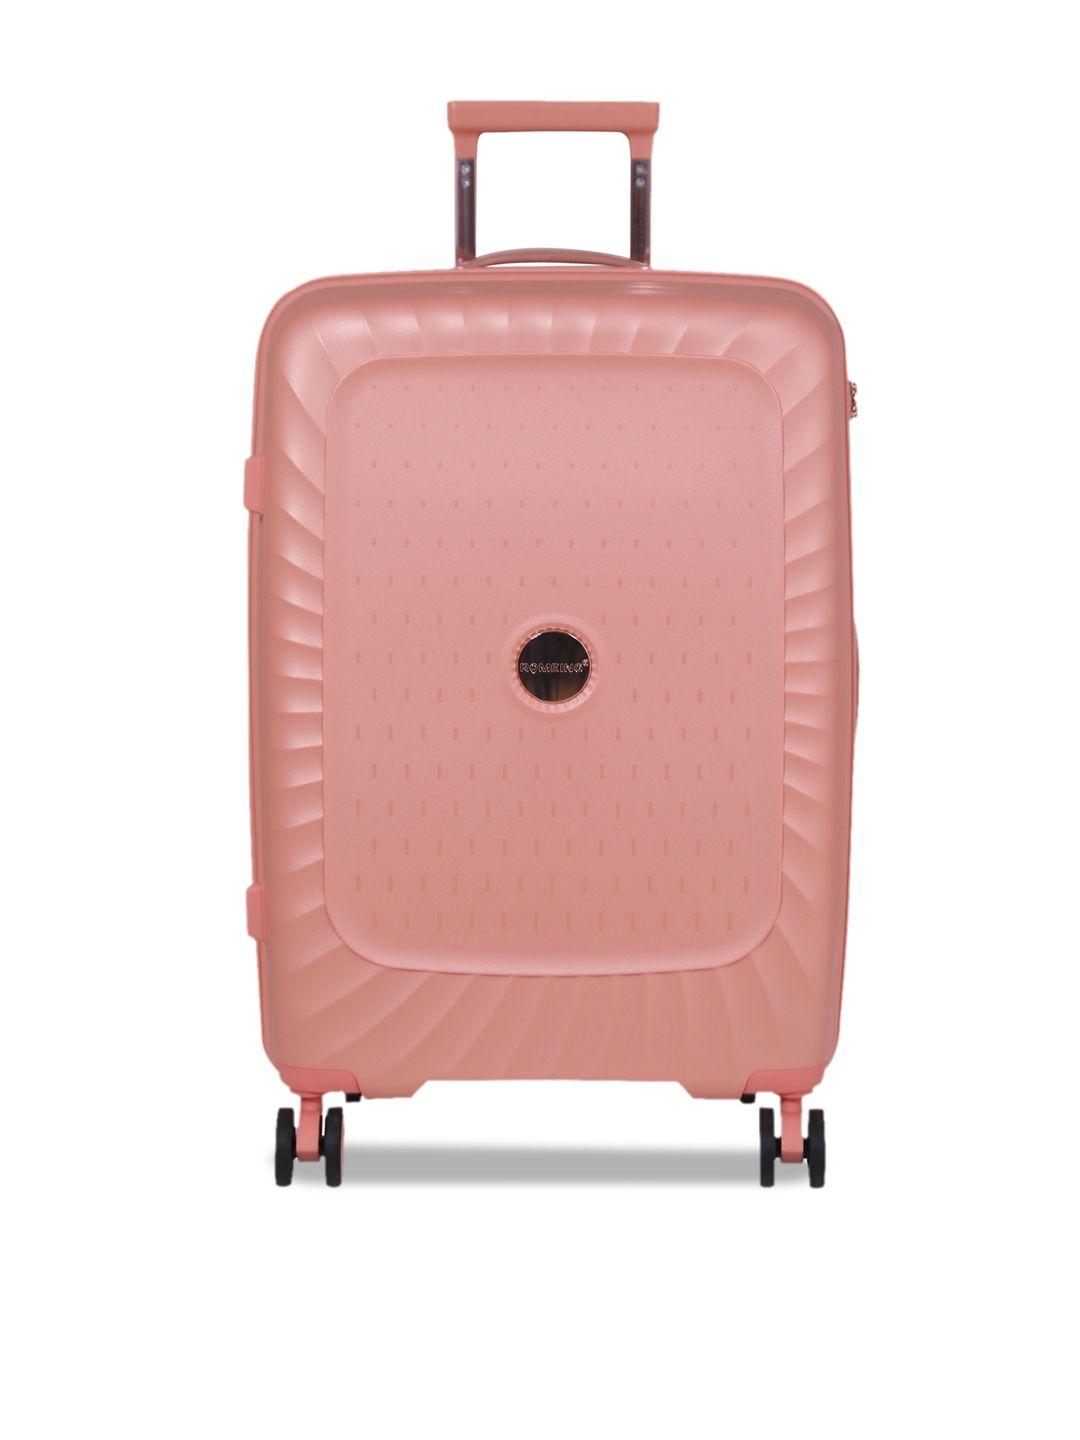 romeing textured medium suitcase trolley bag